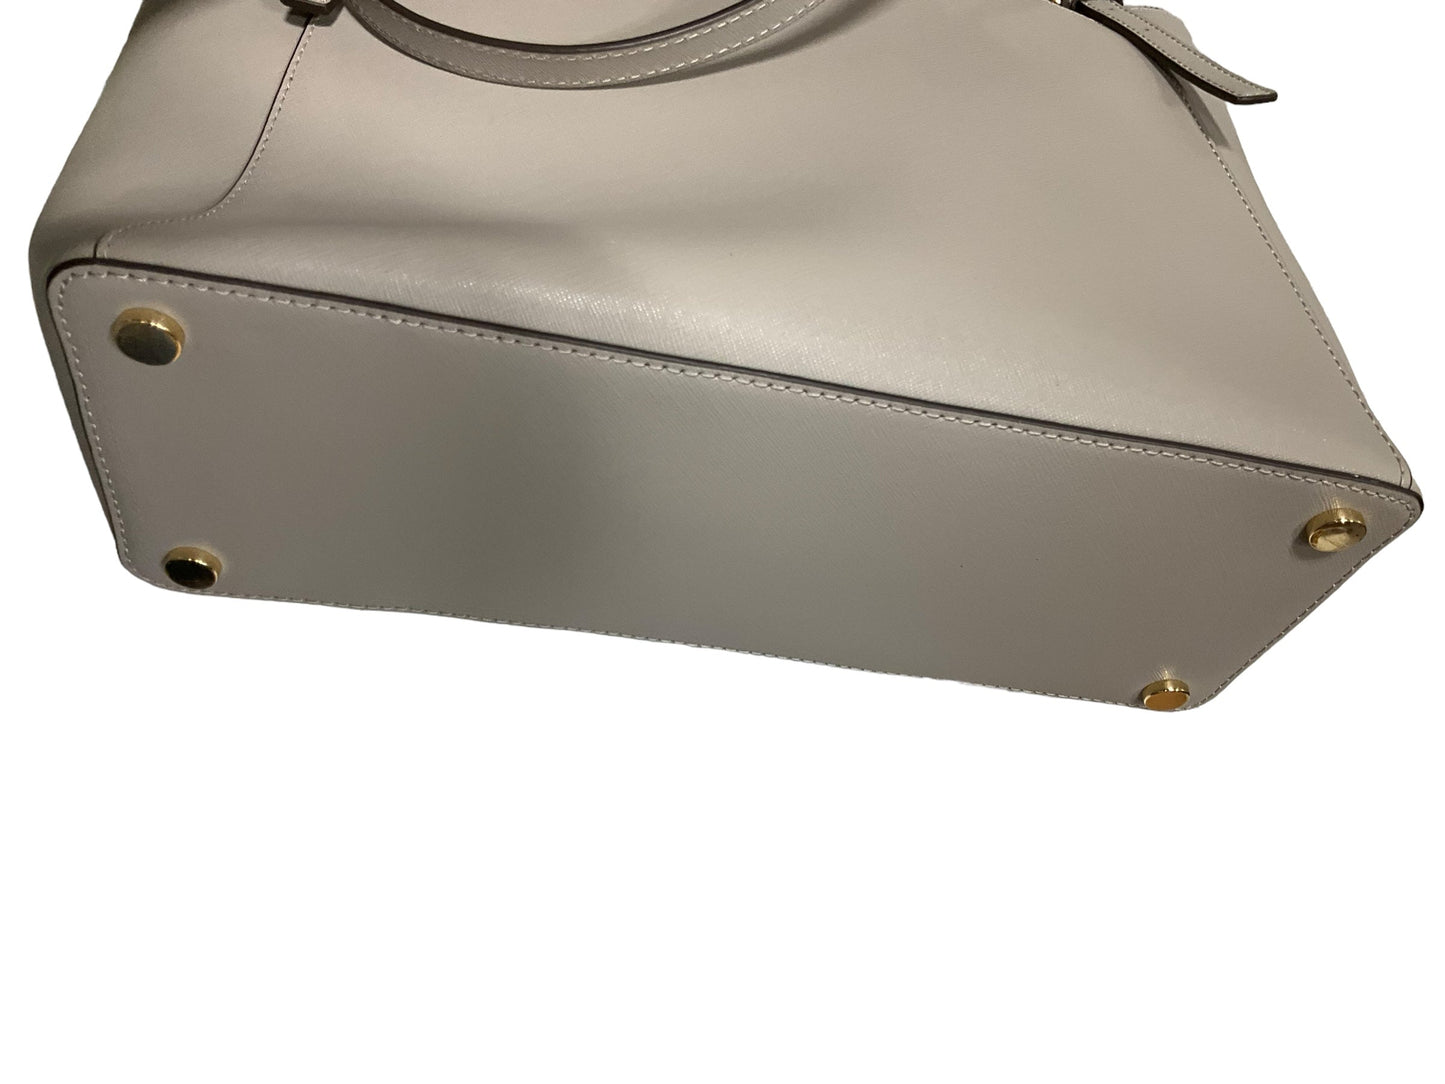 Handbag Leather By Michael Kors  Size: Large